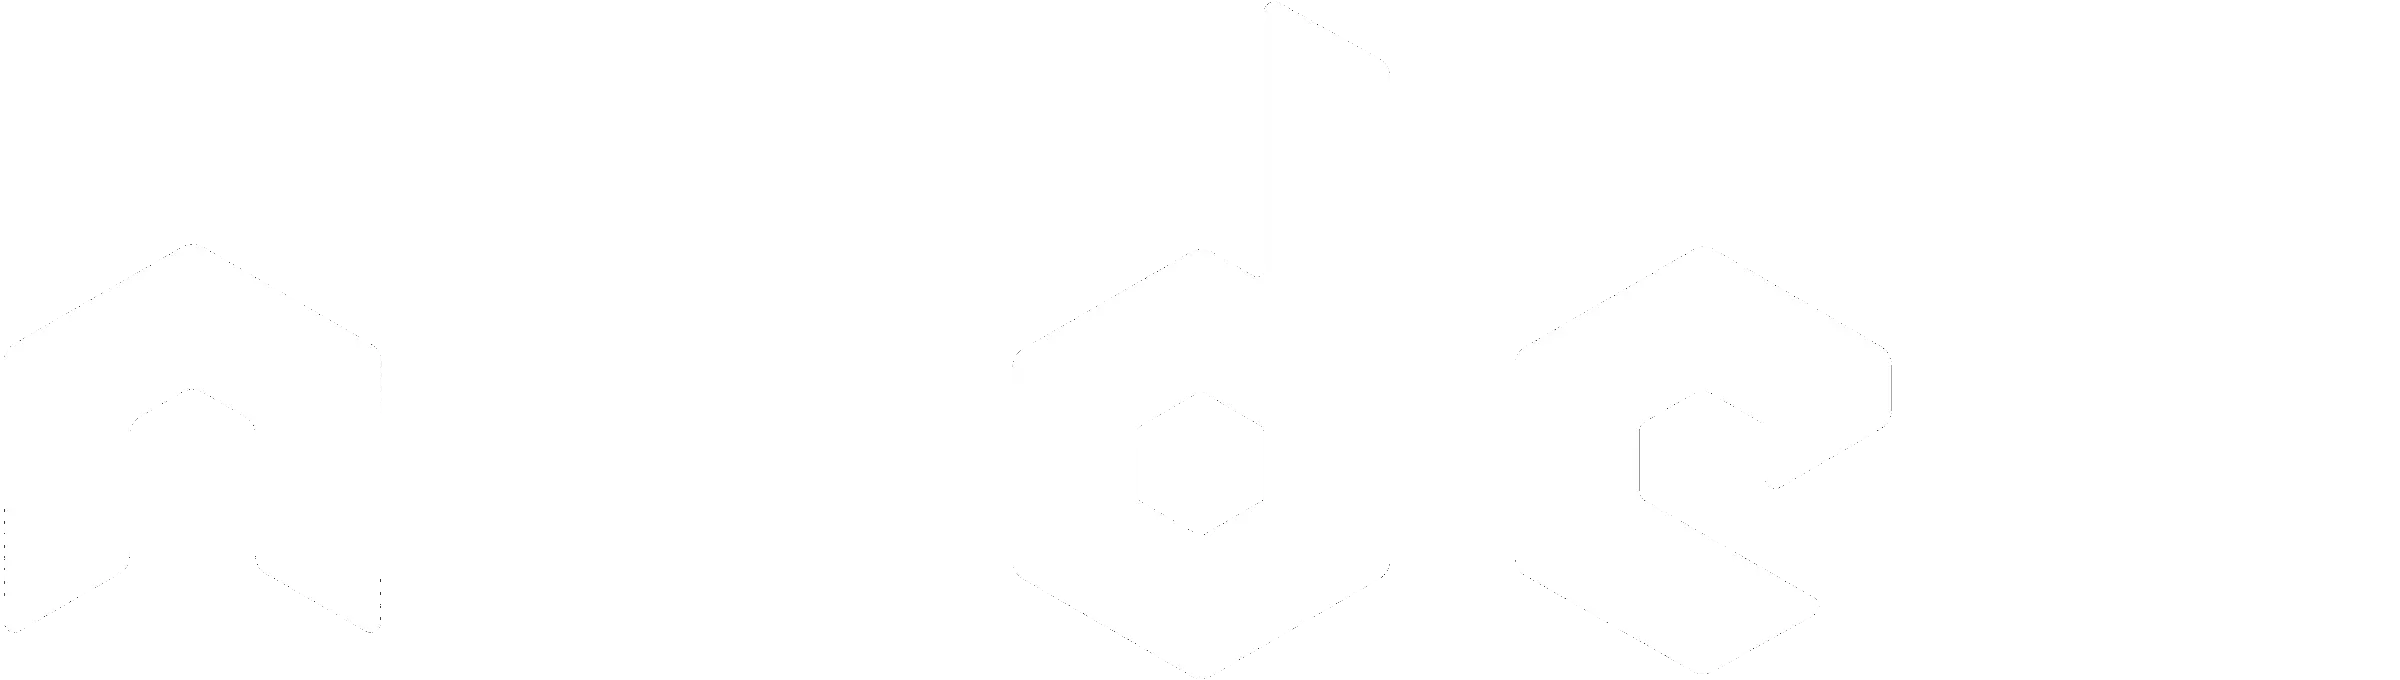 nodejs-logo-black-and-white.webp